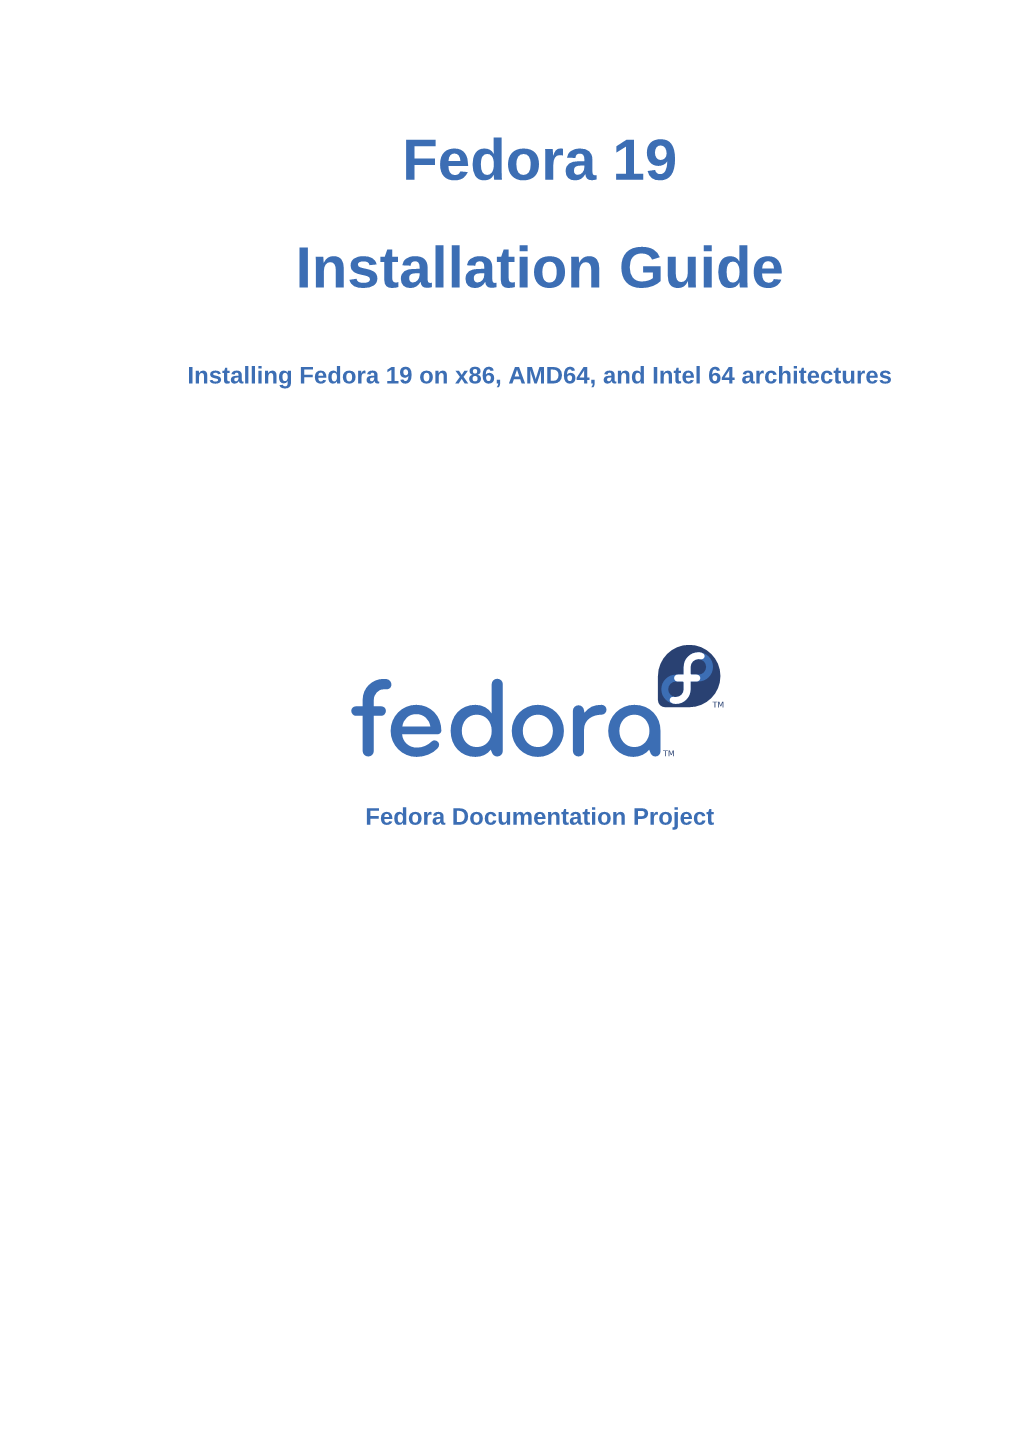 Fedora 19 Installation Guide